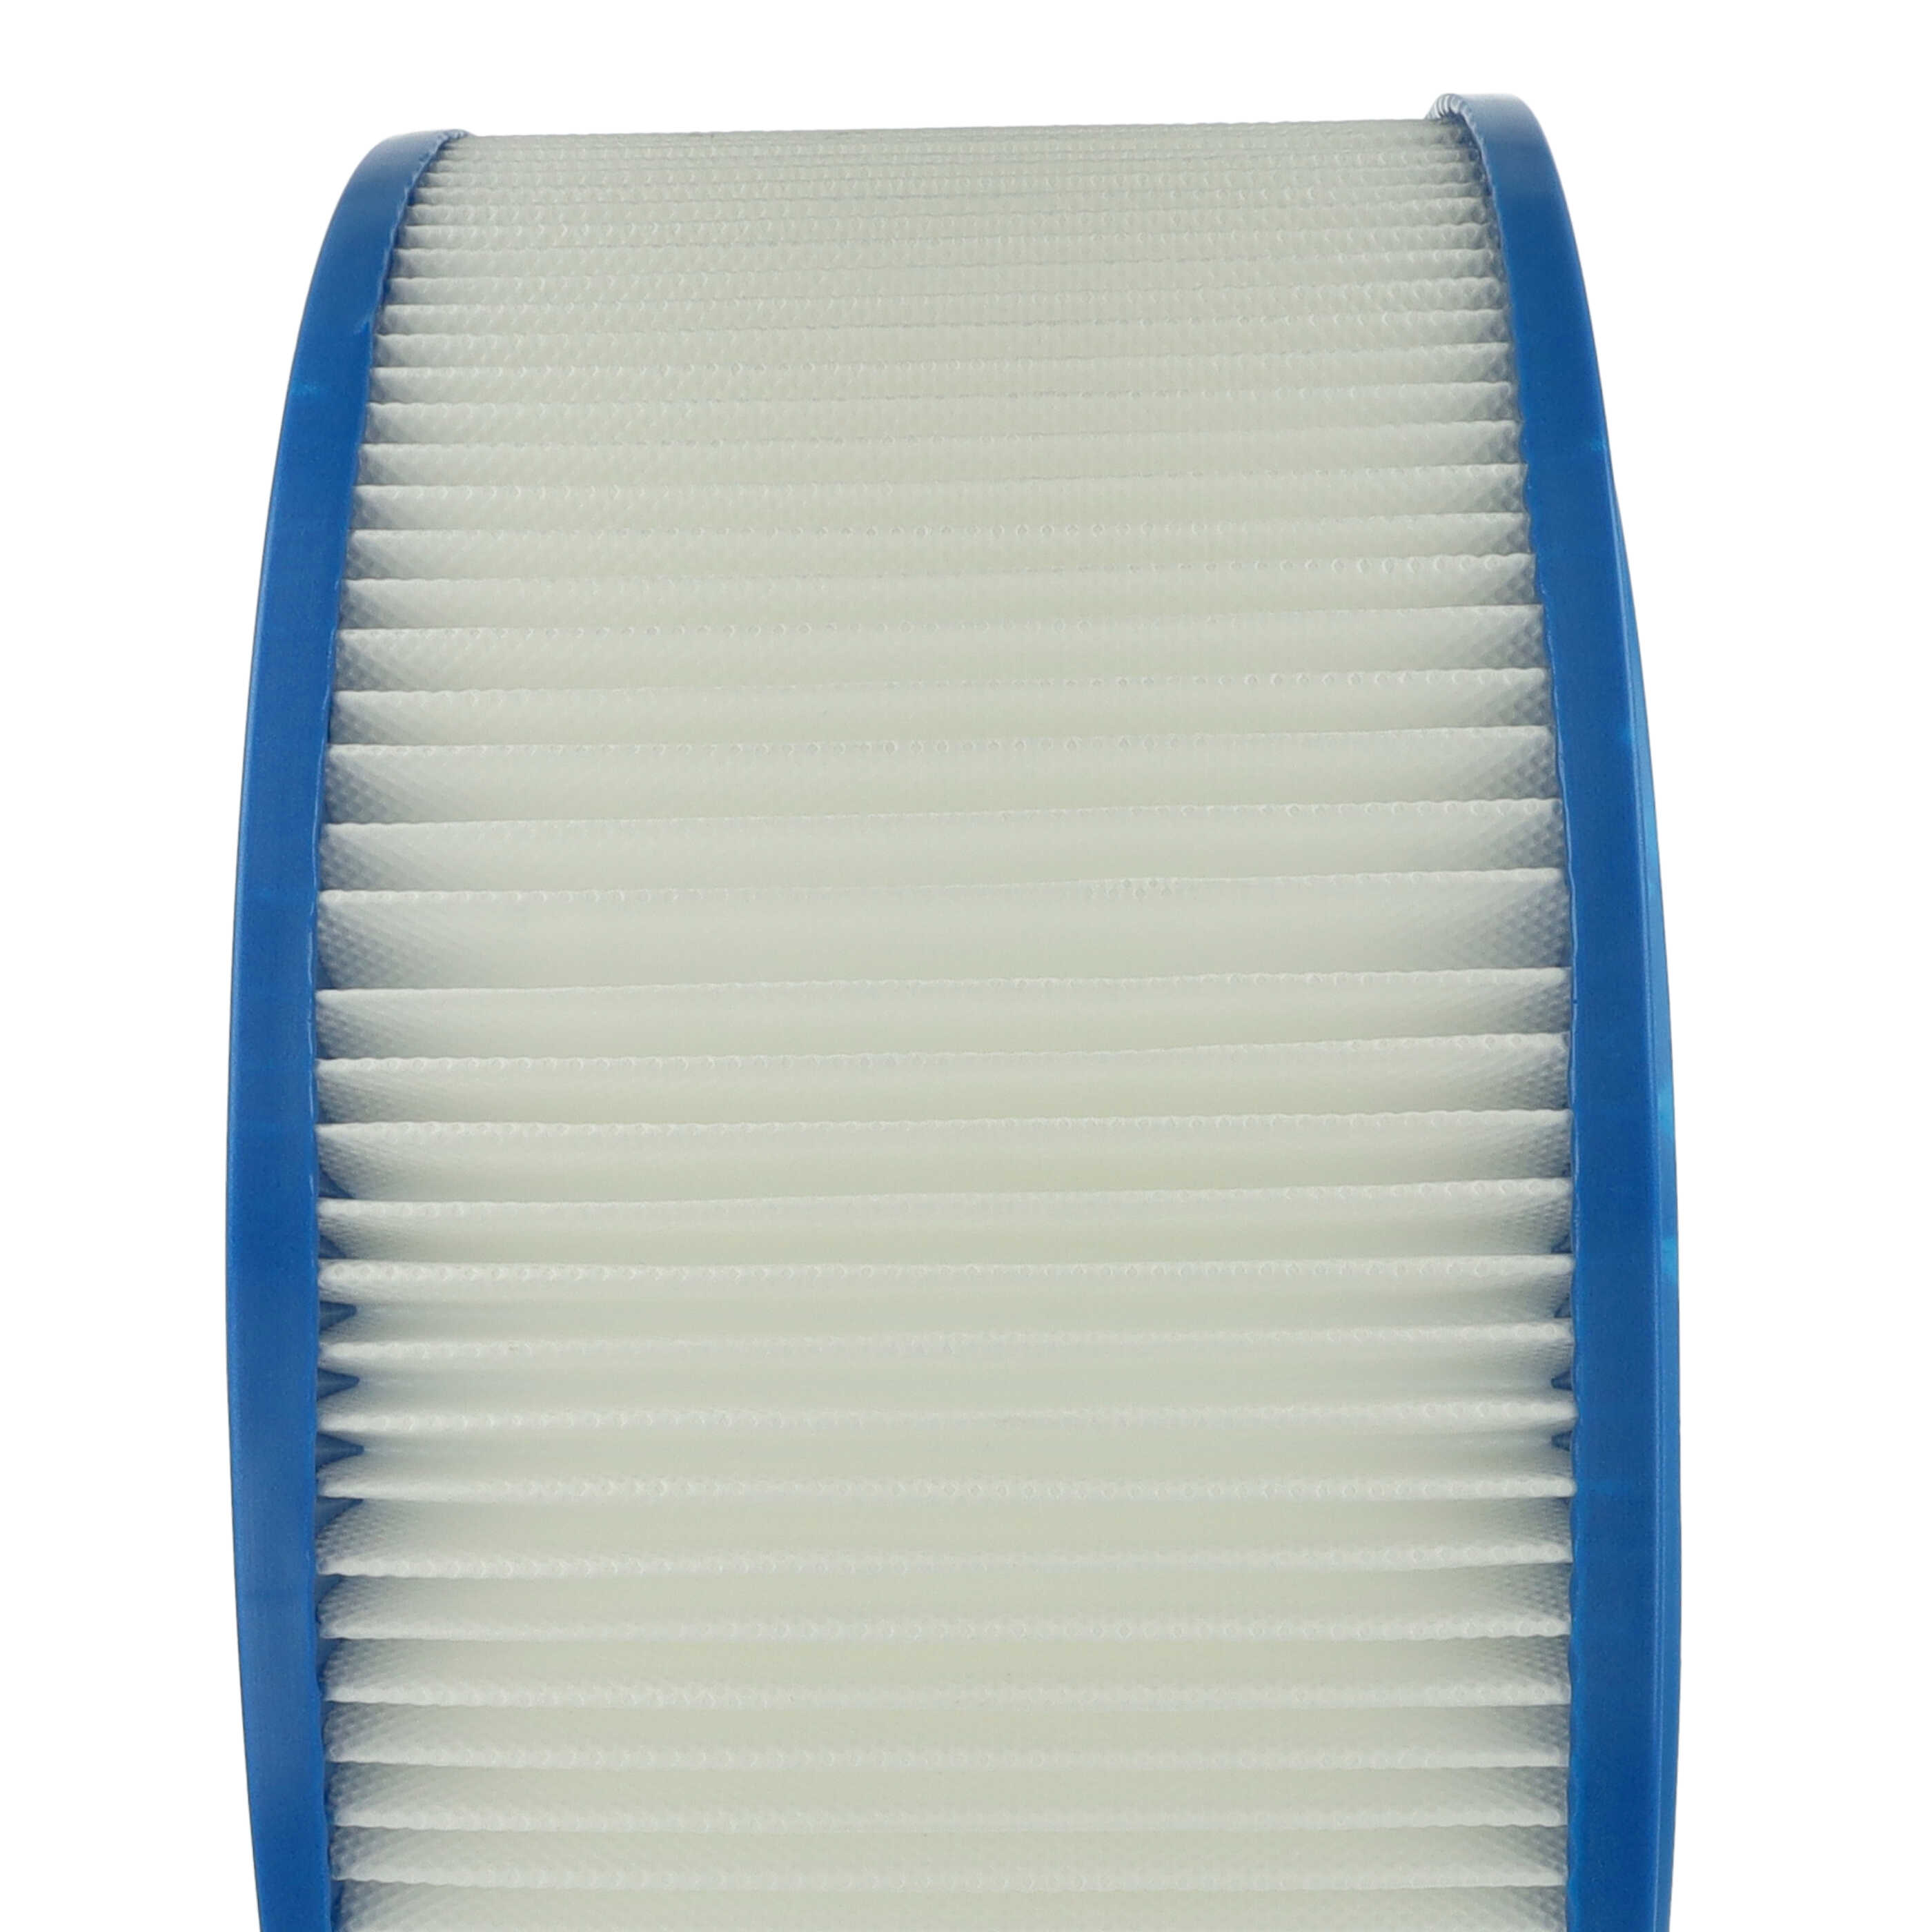 1x cartridge filter replaces Hilti 371145 for Hilti Vacuum Cleaner